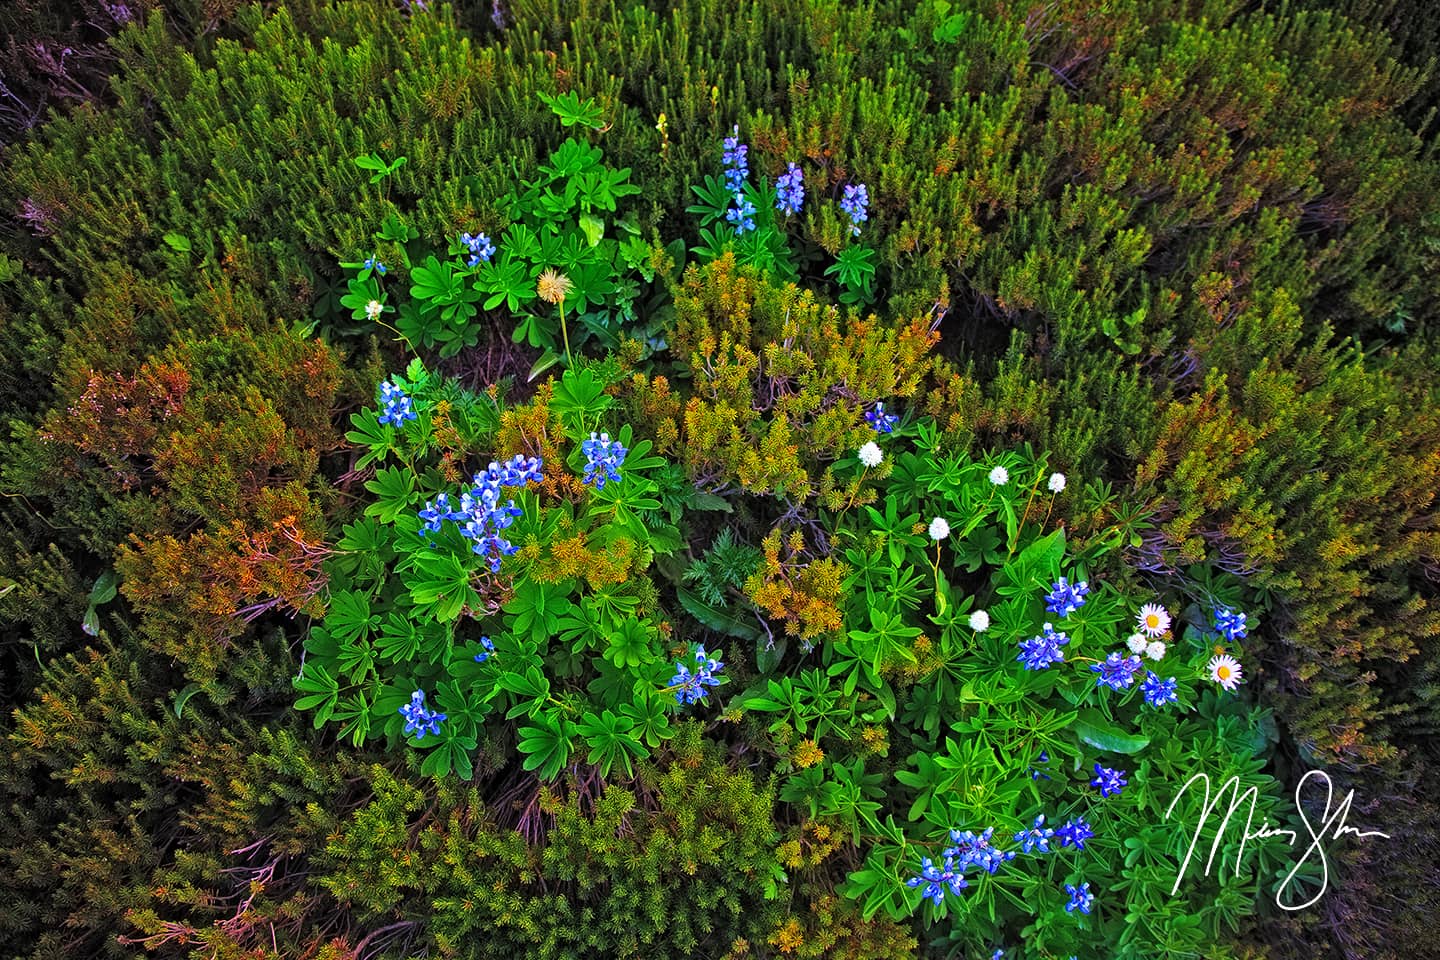 Rainier Flowers Patch - Paradise, Mount Rainier National Park, Washington, USA